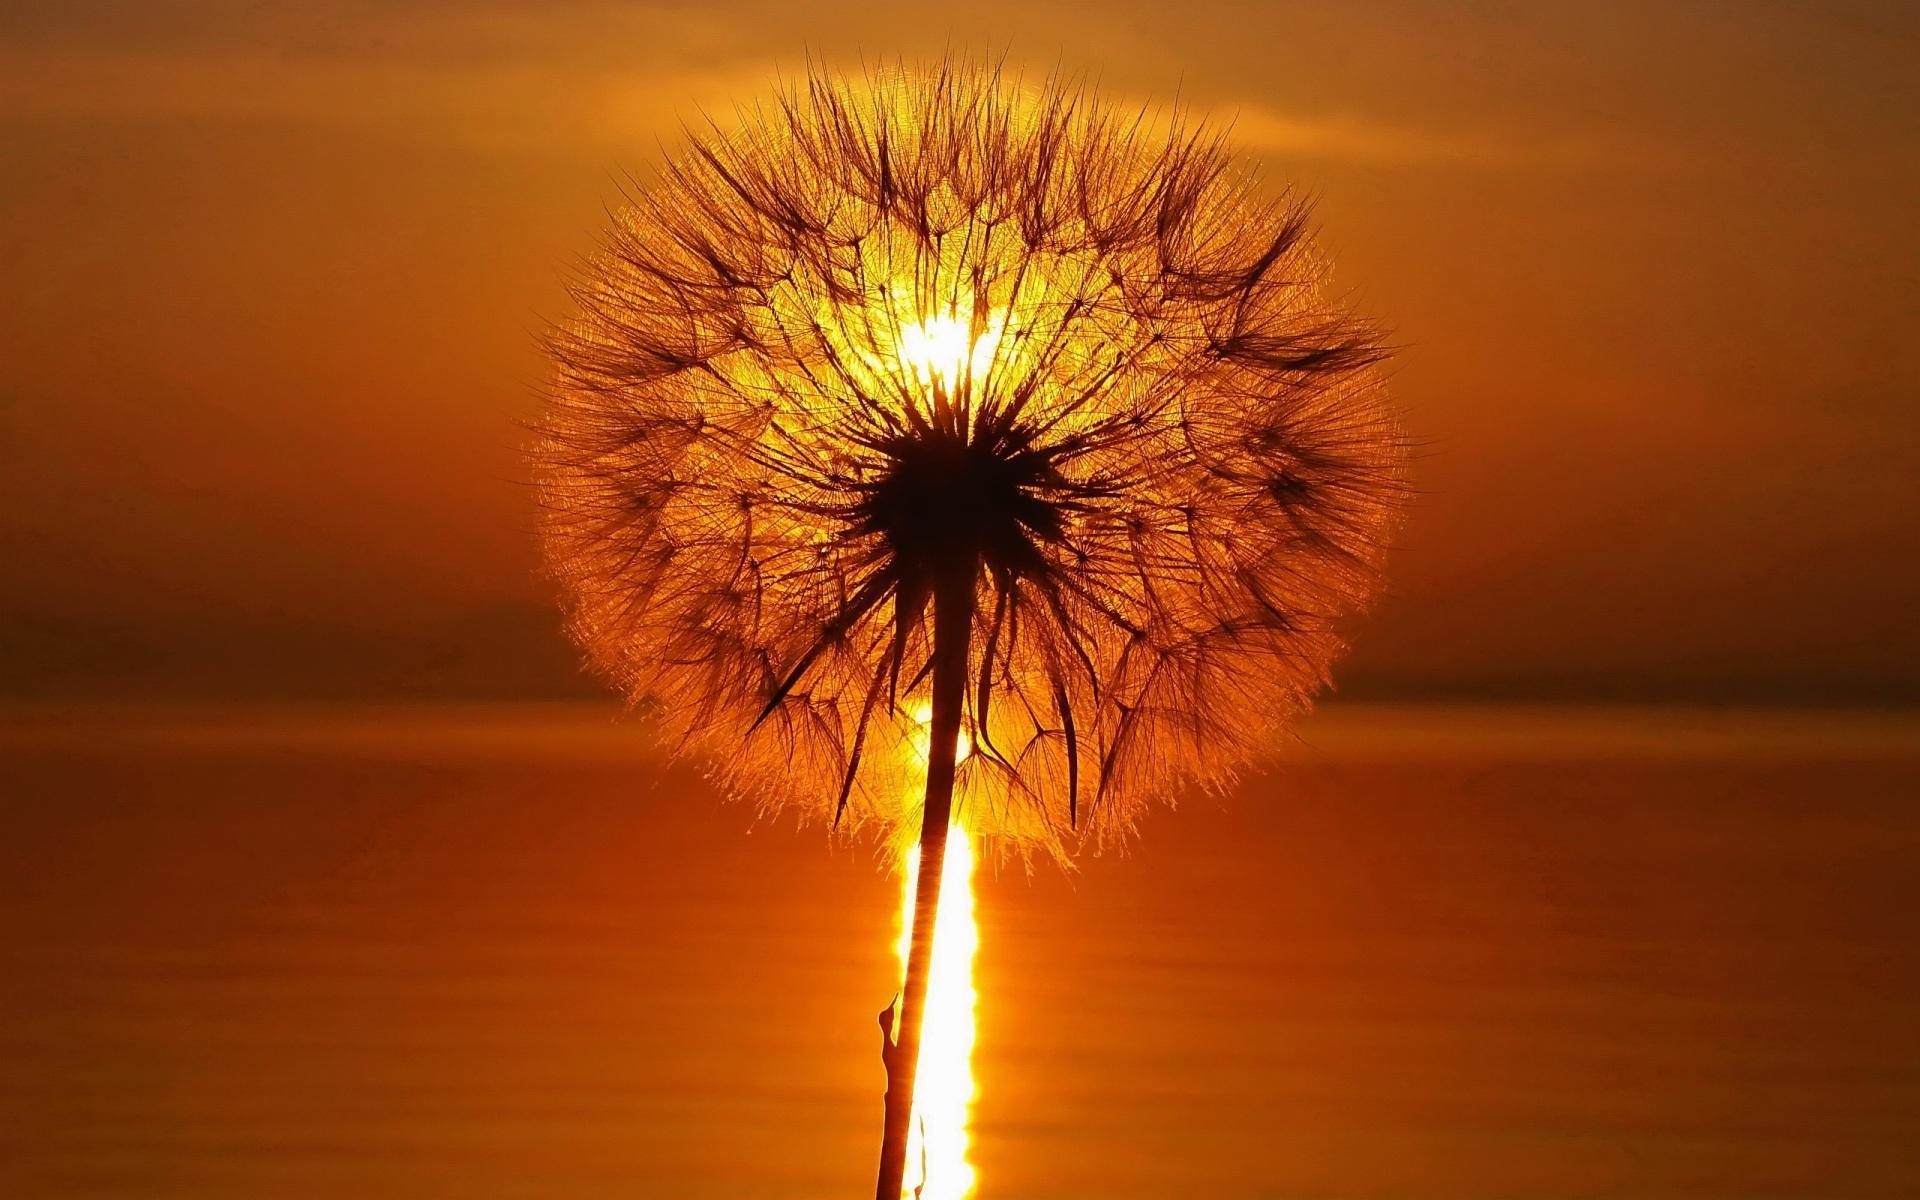 A dandelion at sunset